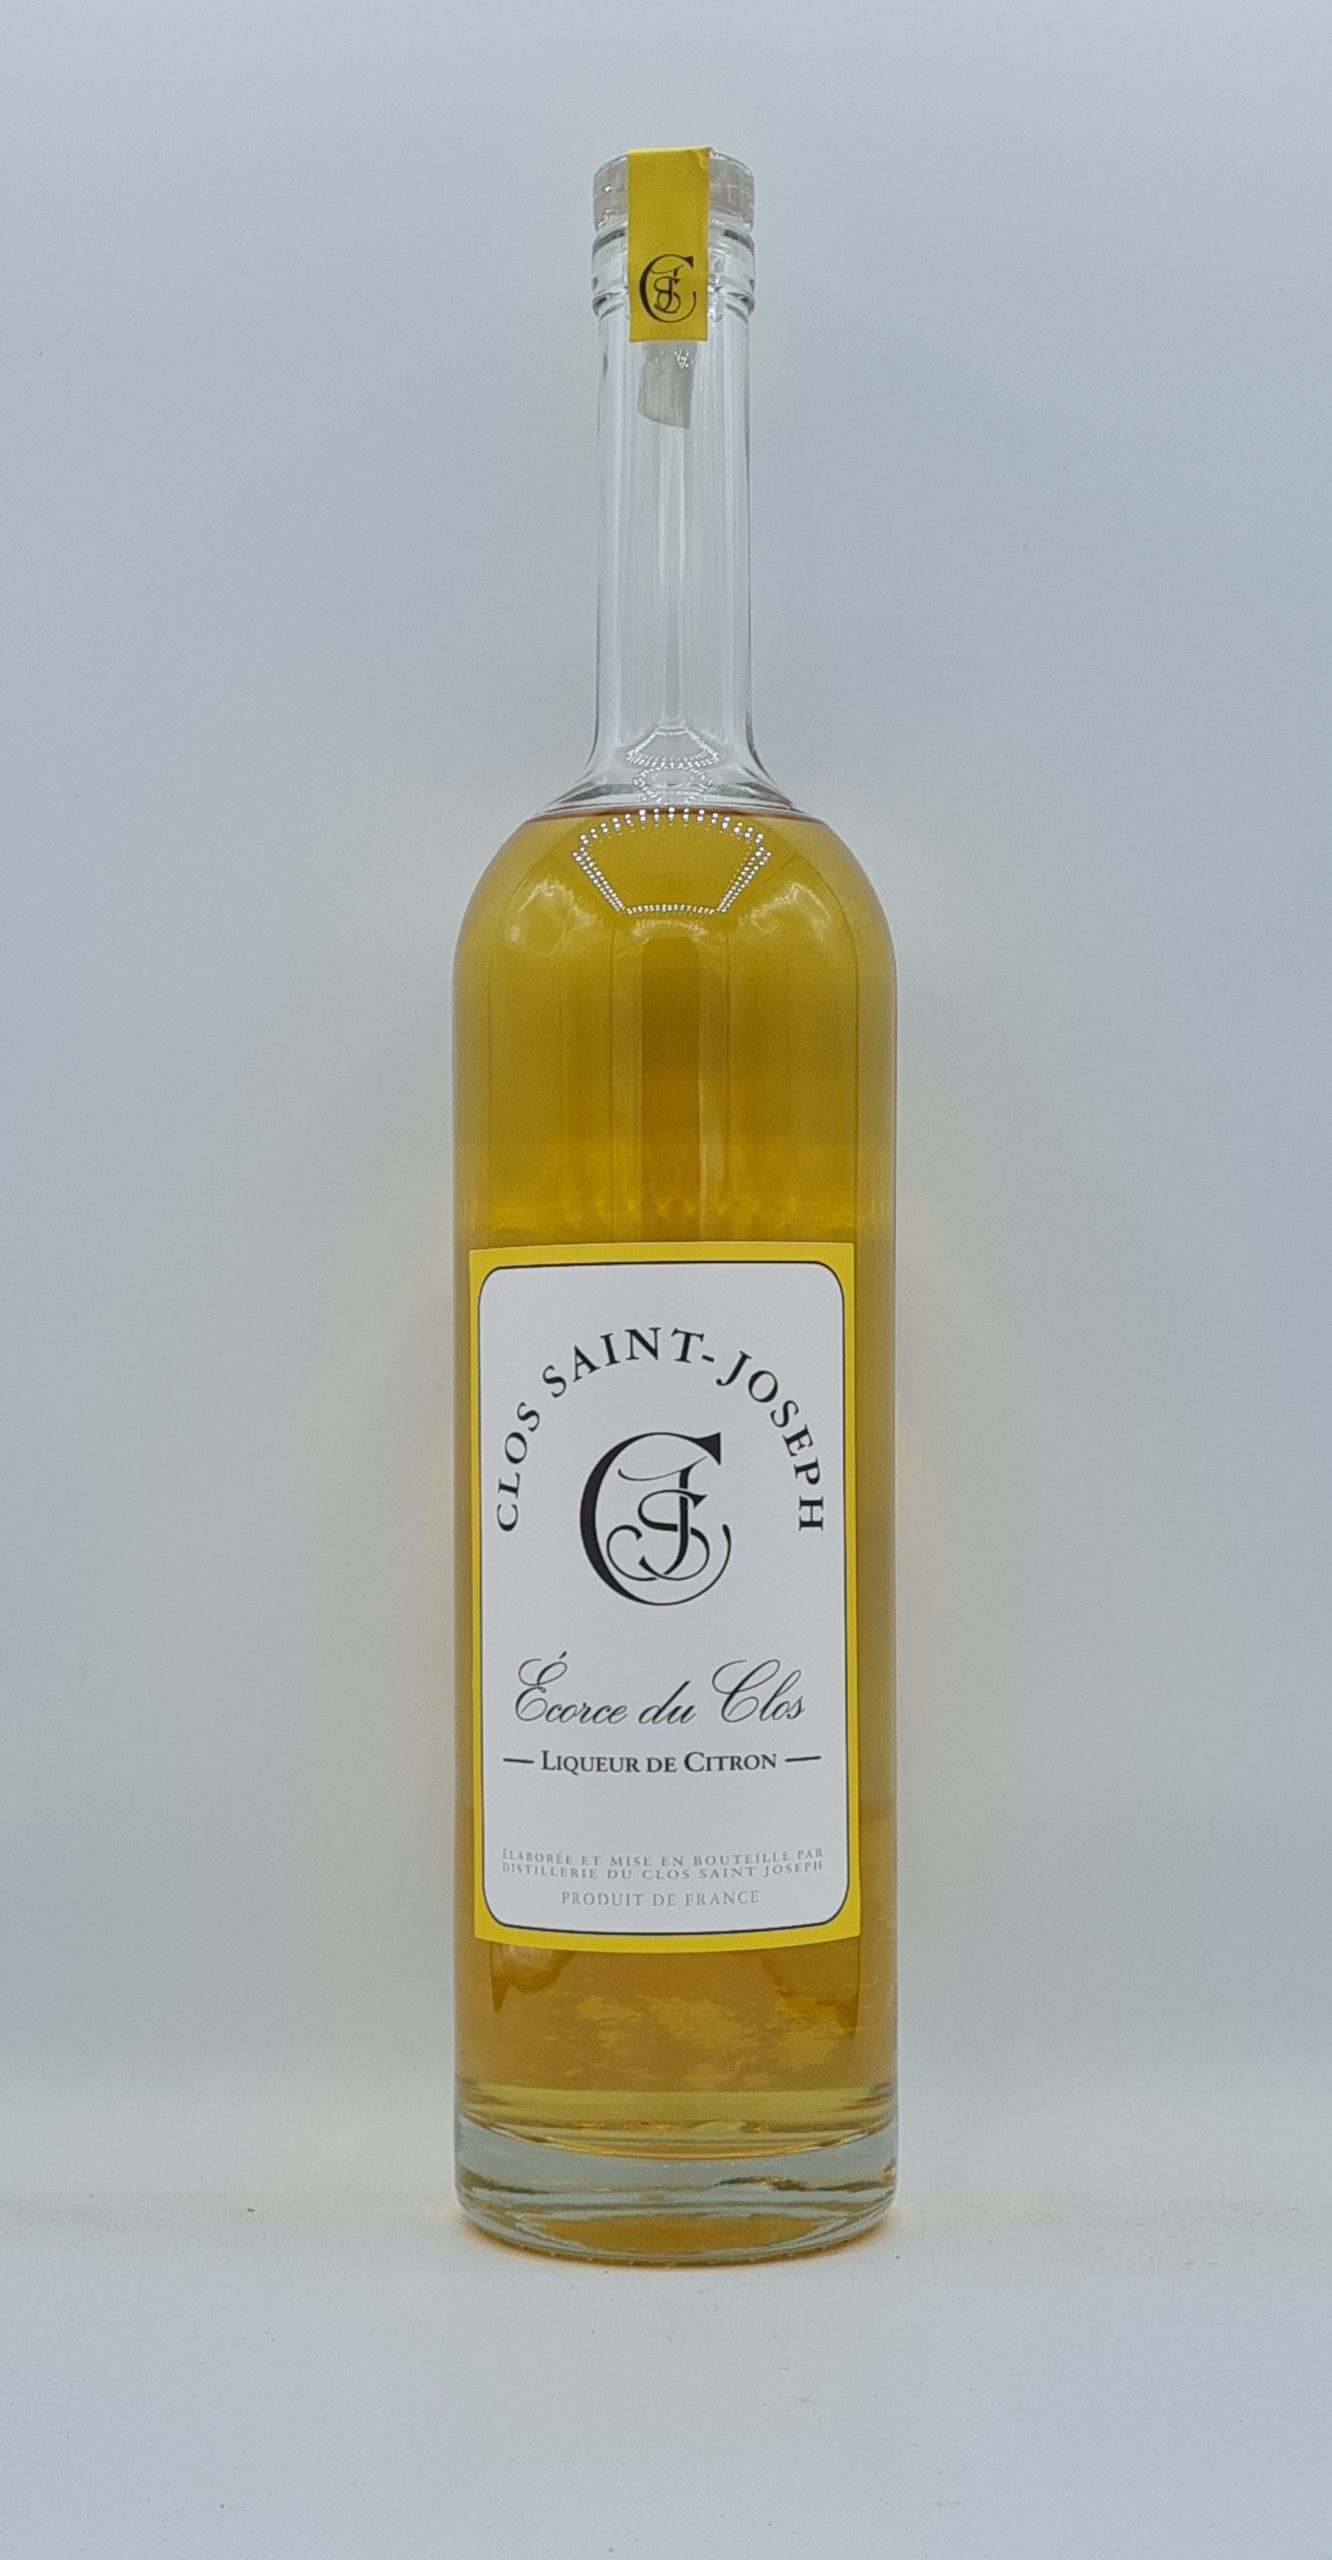 Liqueur de Citron “Ecorce du Clos” 37% Clos Saint Joseph Magnum